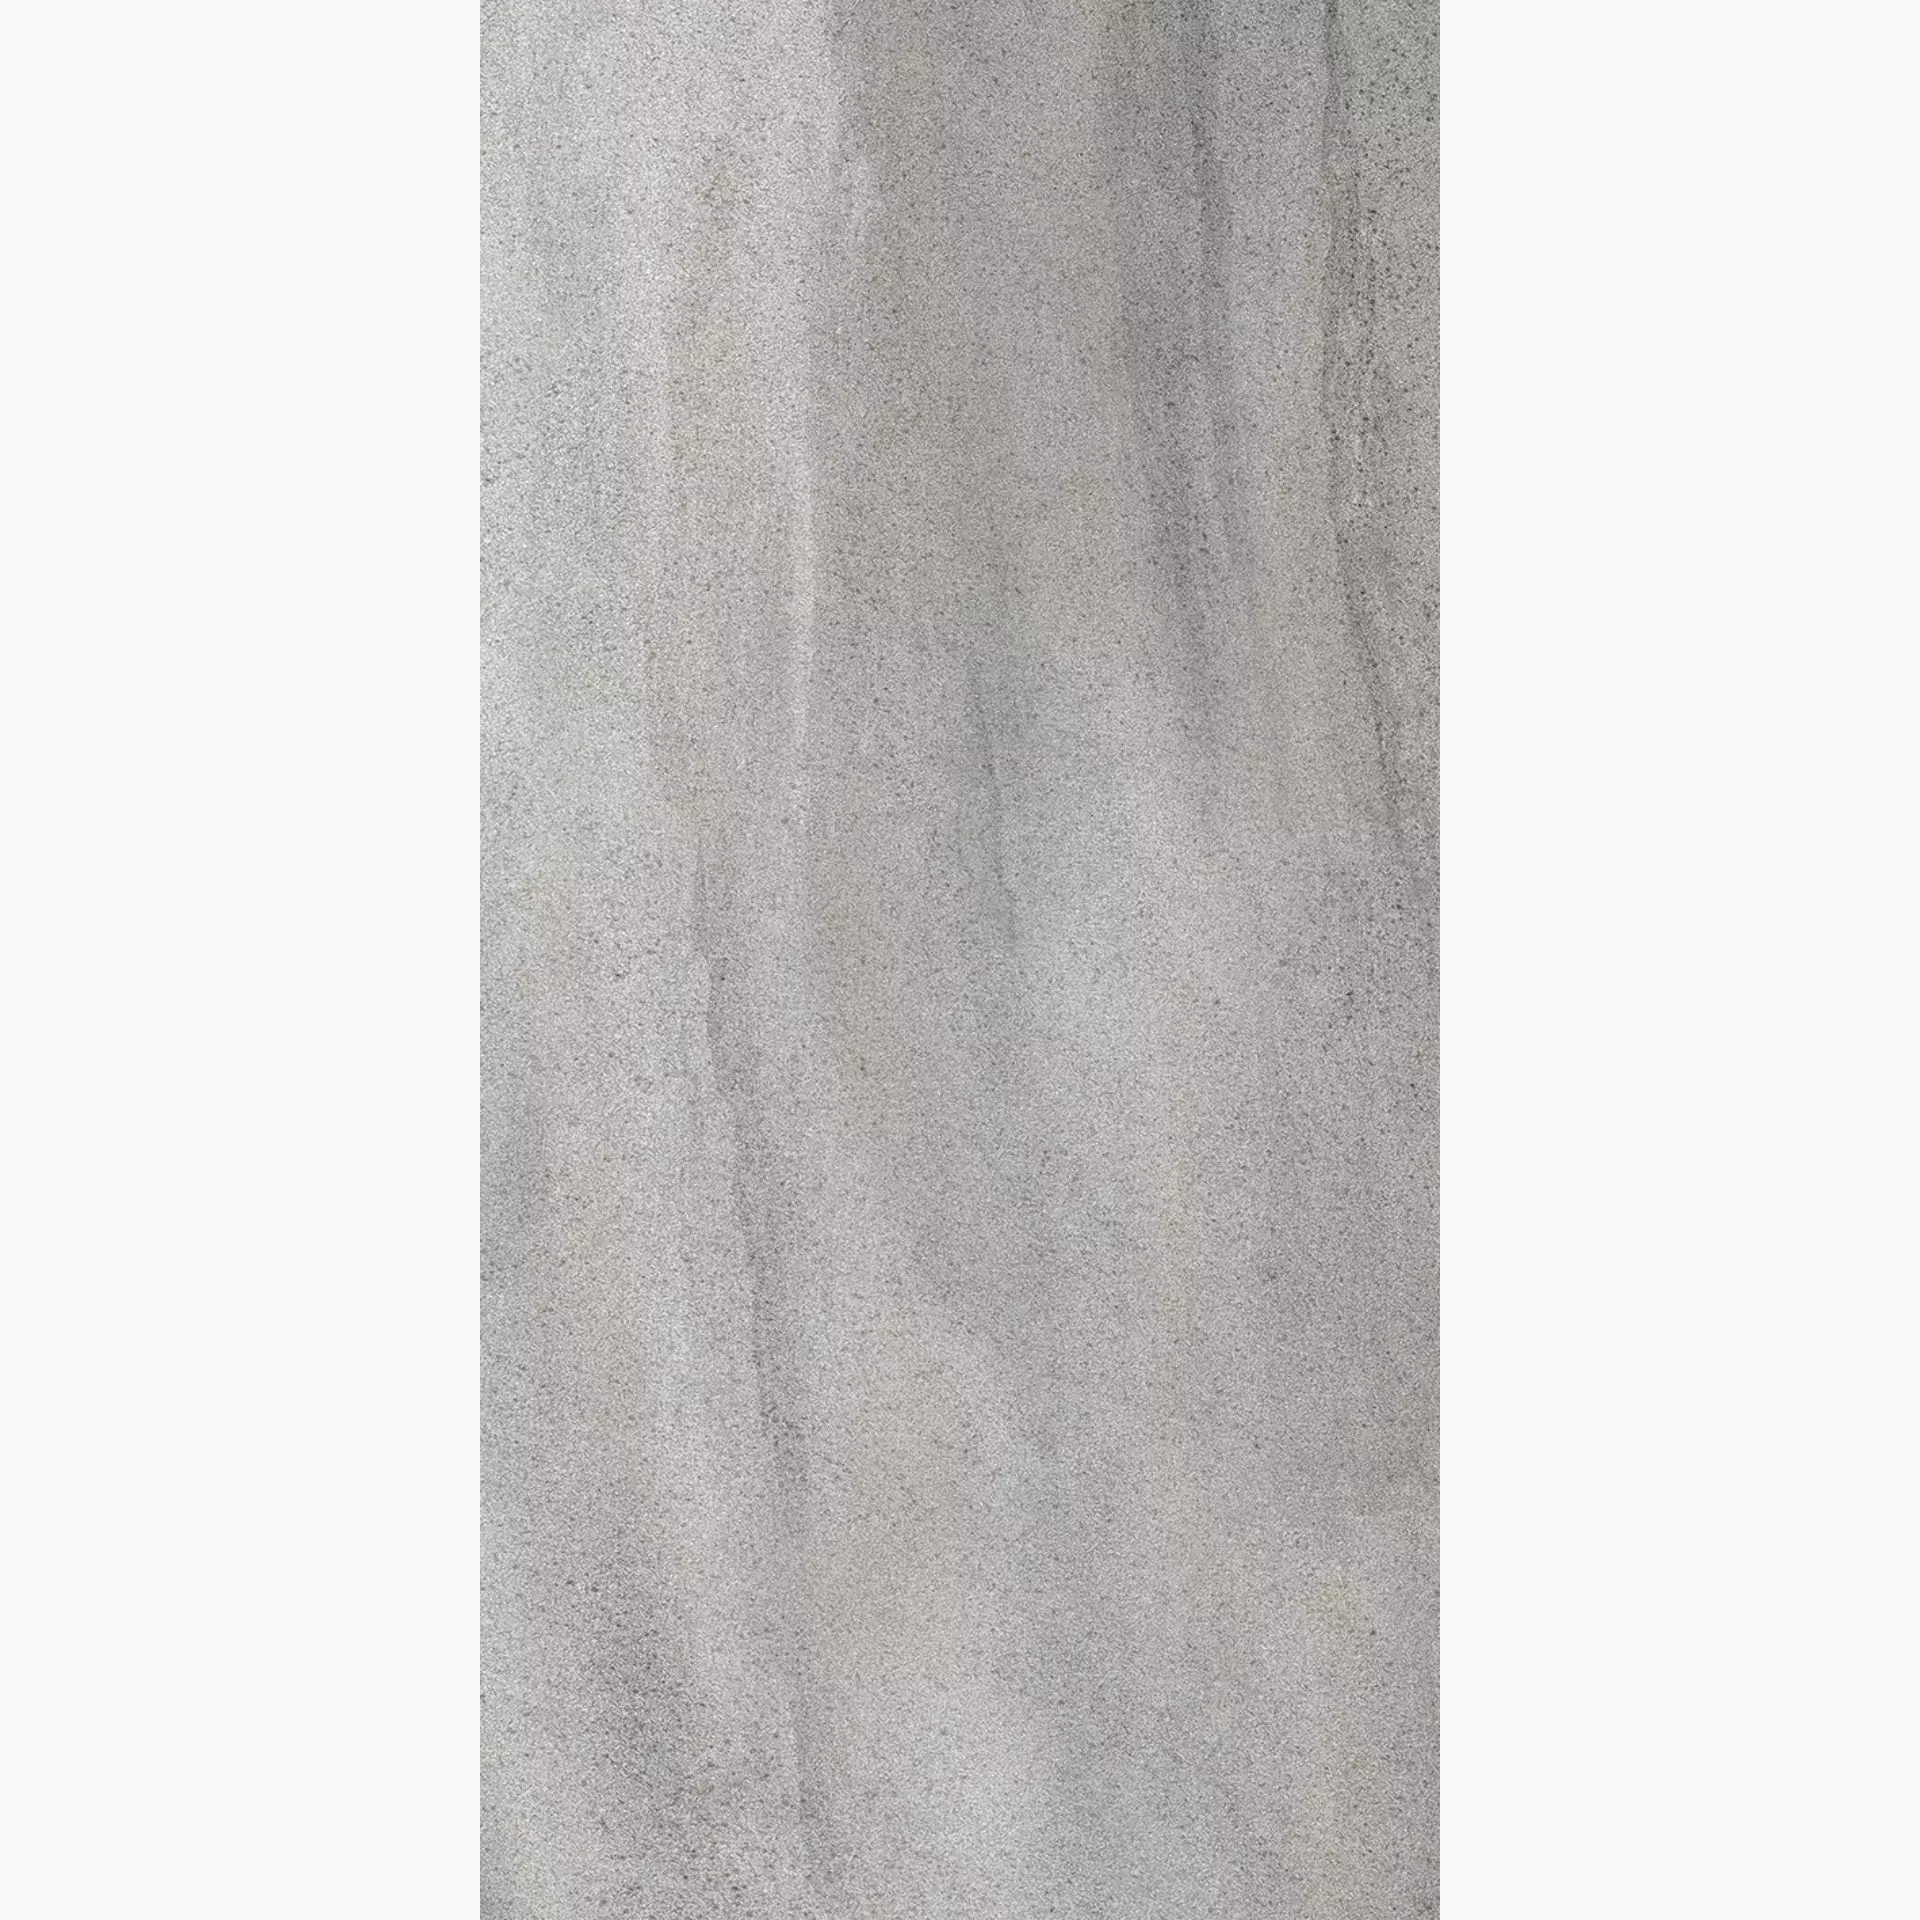 Villeroy & Boch Natural Blend Stone Grey Matt 2730-LY60 60x120cm rectified 10mm